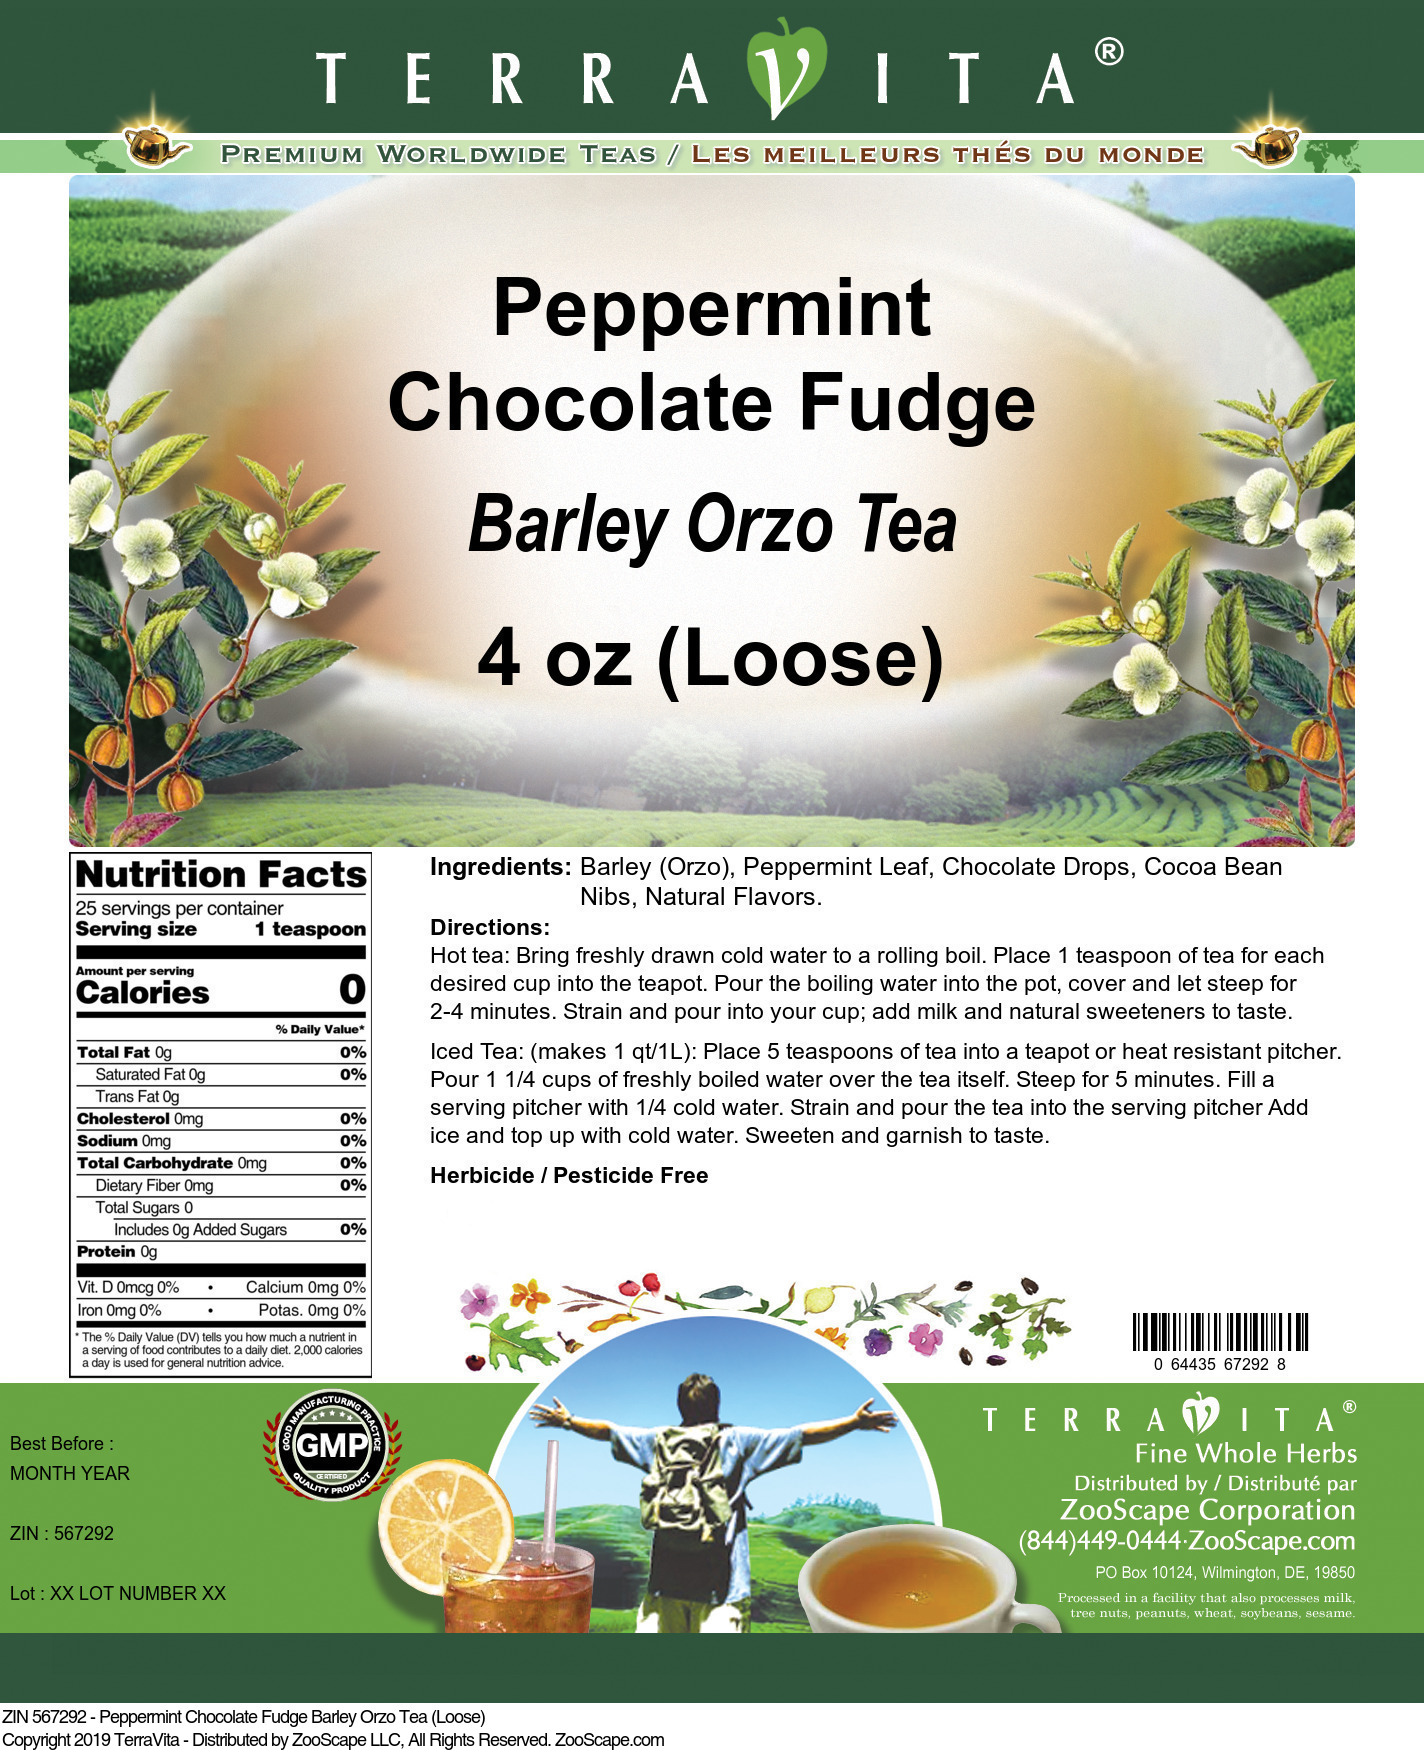 Peppermint Chocolate Fudge Barley Orzo Tea (Loose) - Label